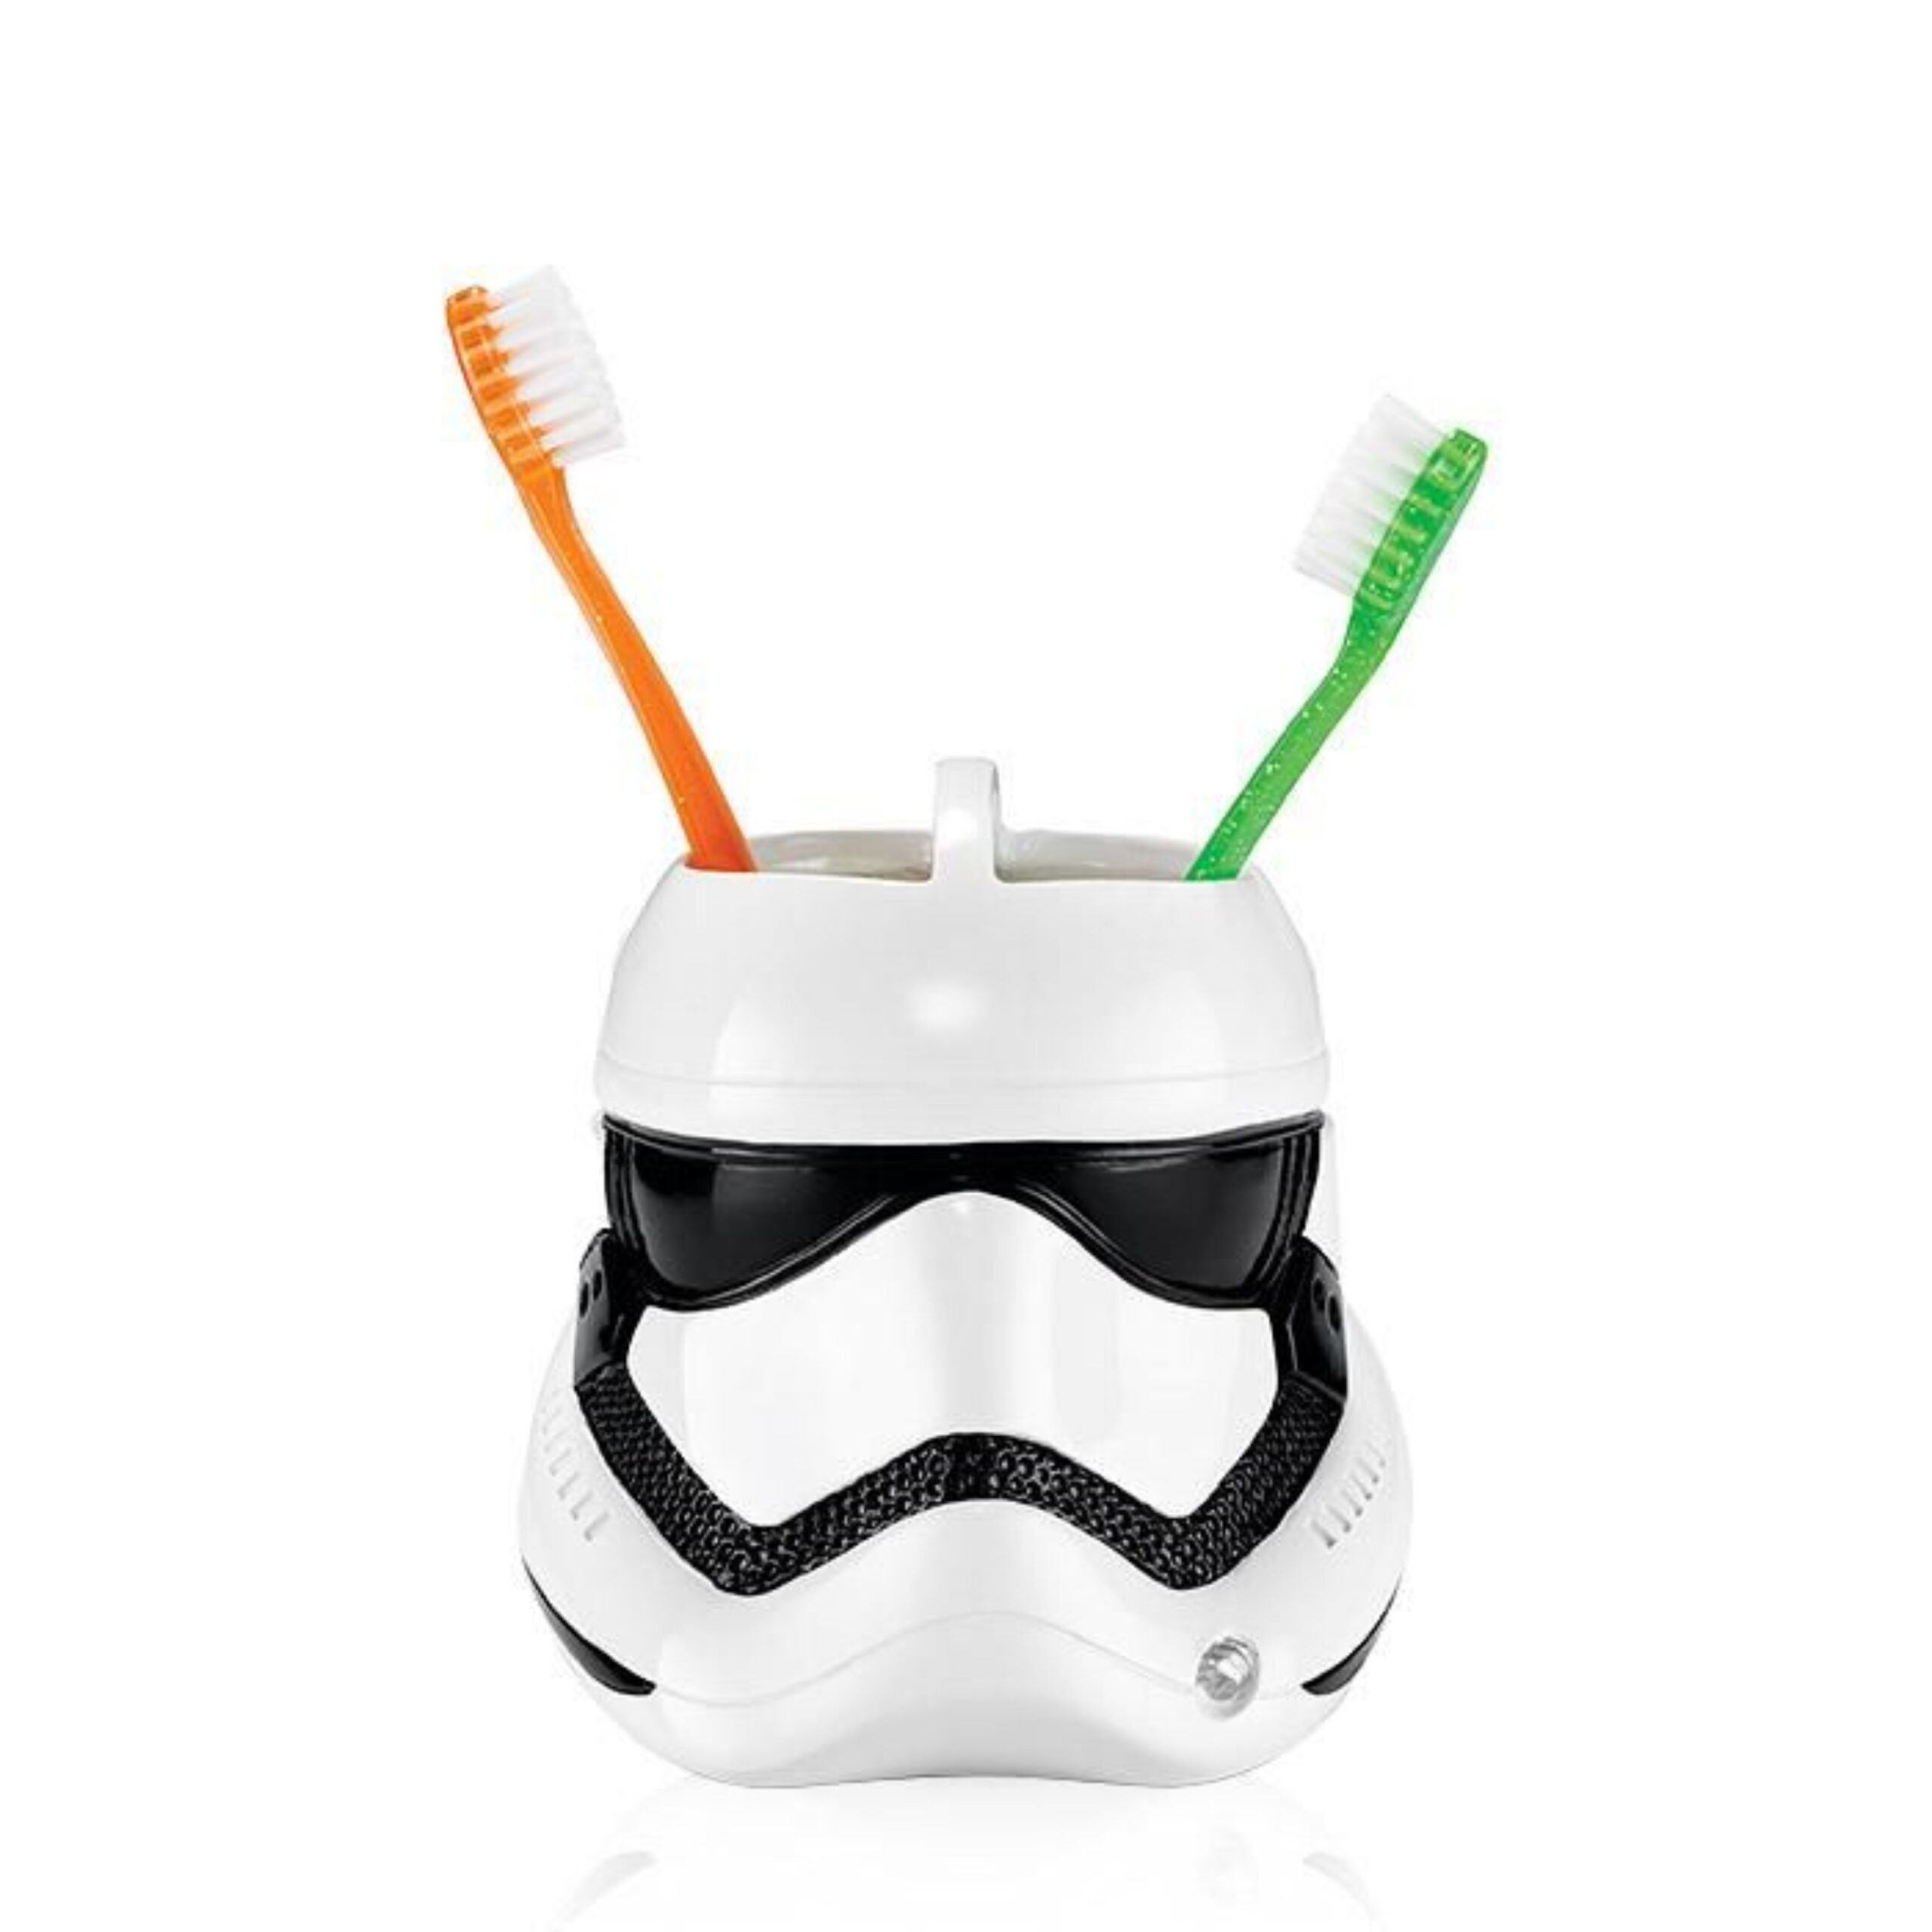 Star Wars Toothbrush holders